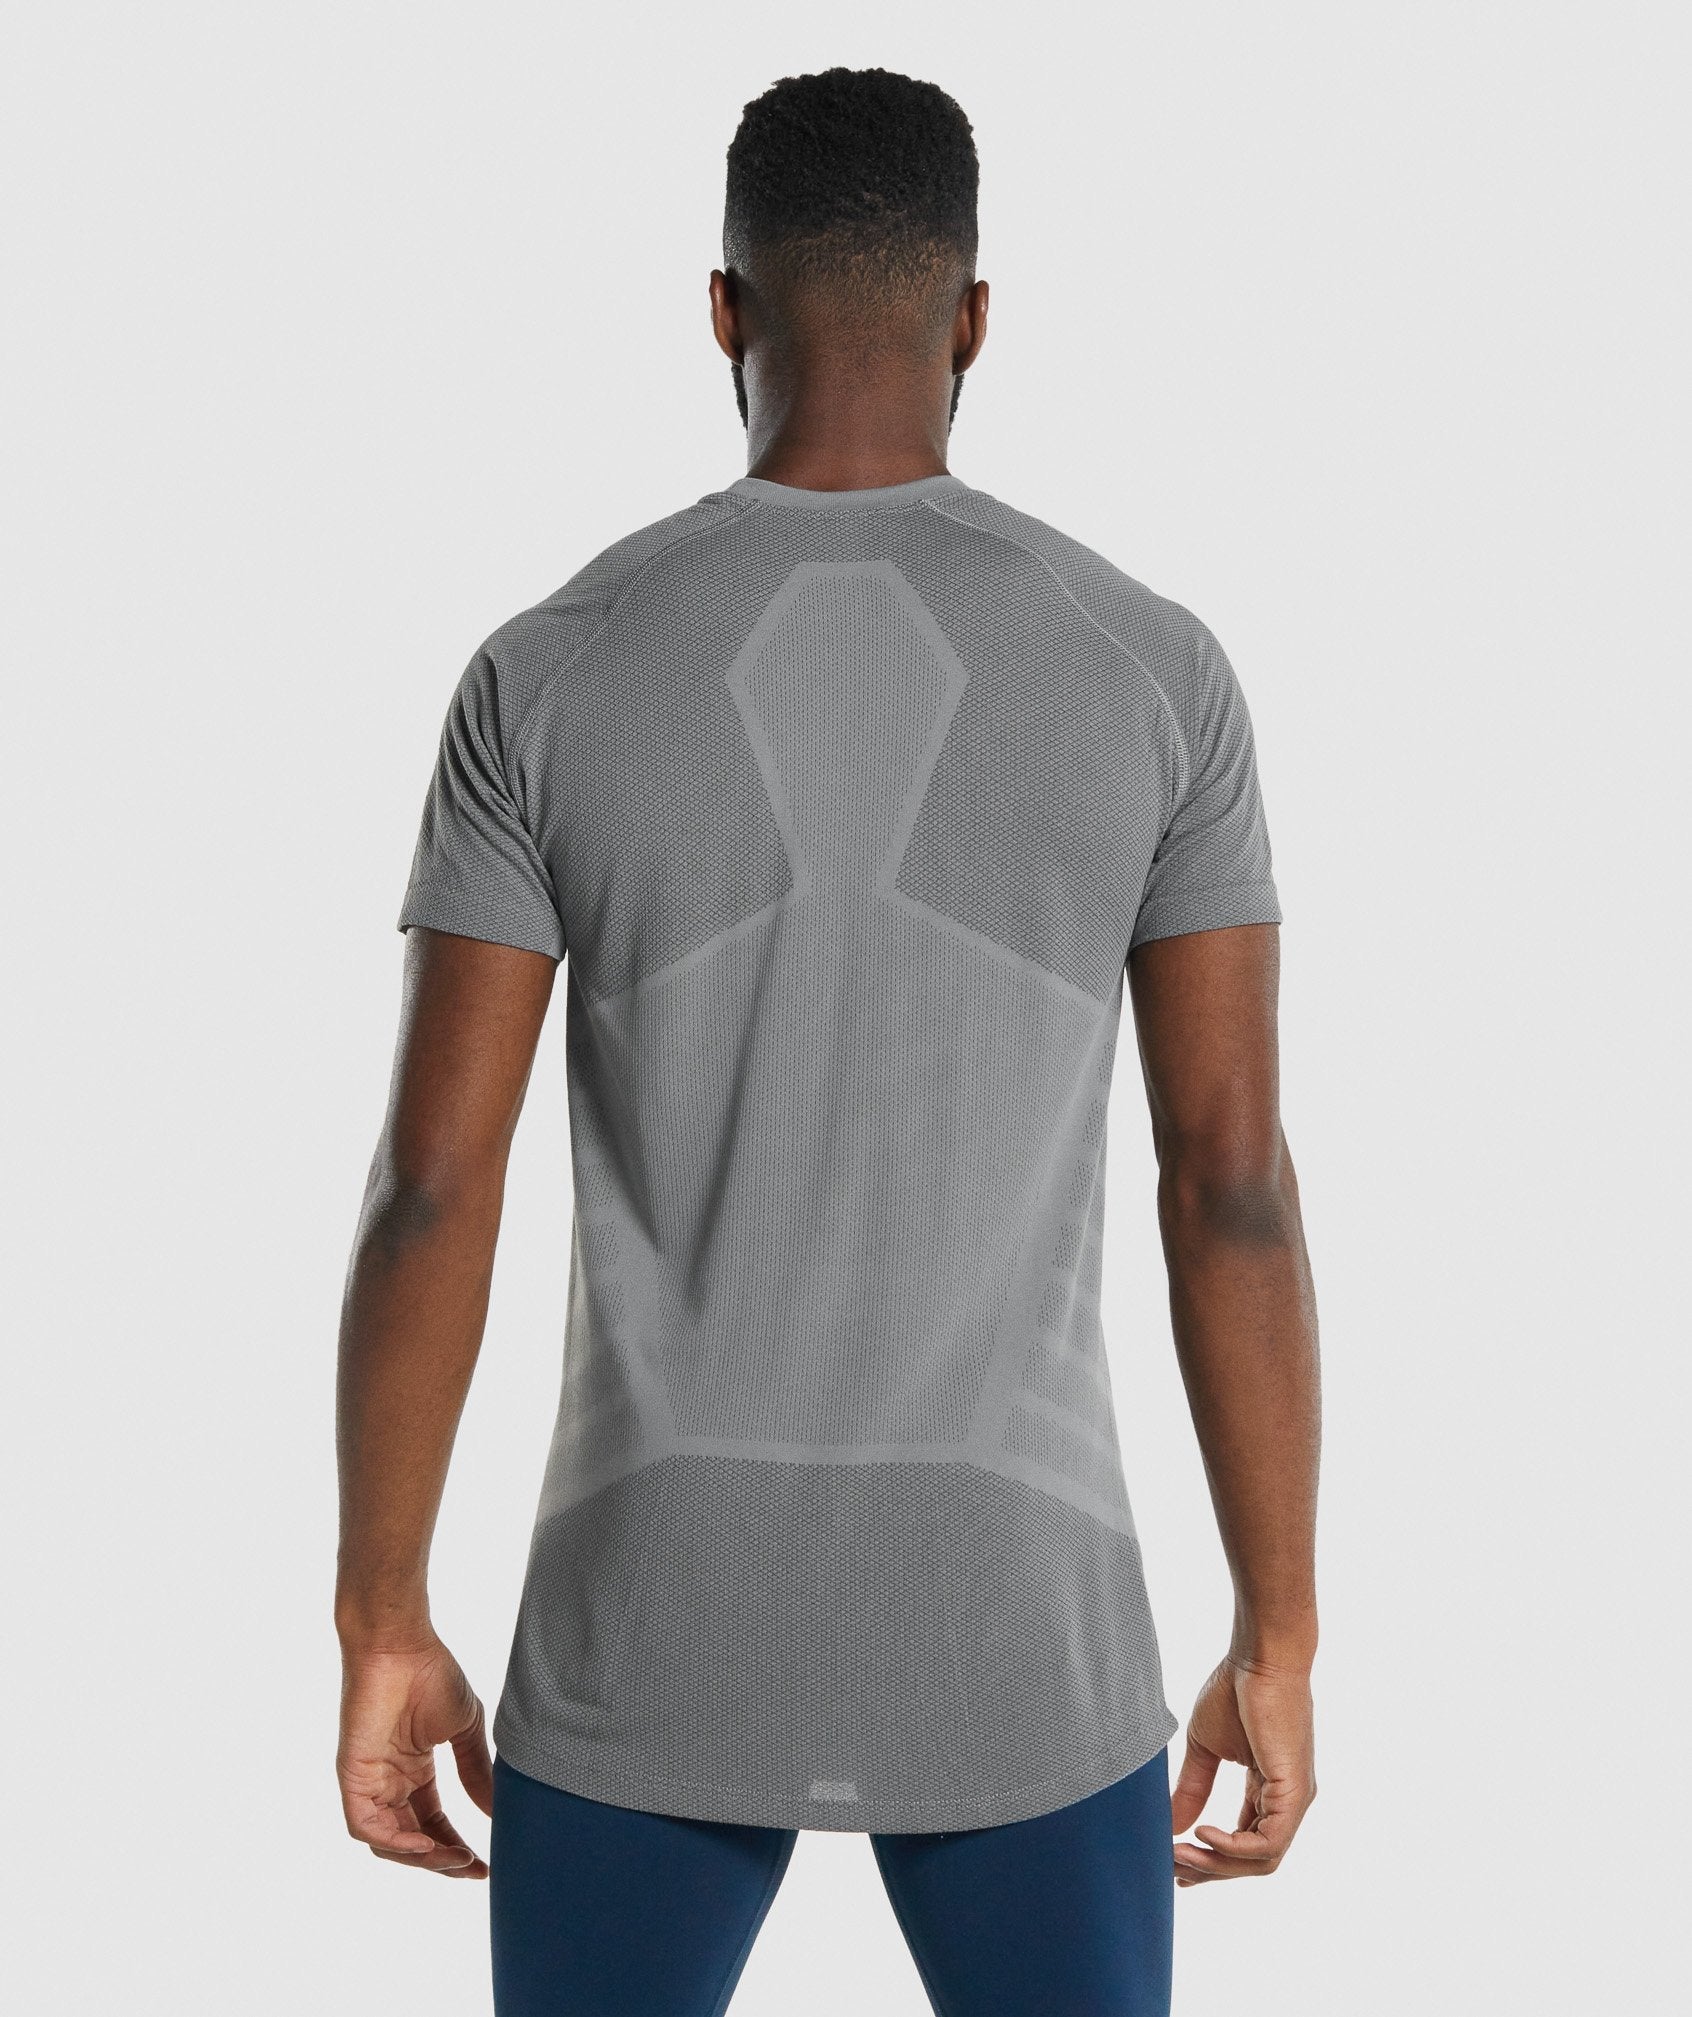 315 T-Shirt in Smokey Grey - view 3